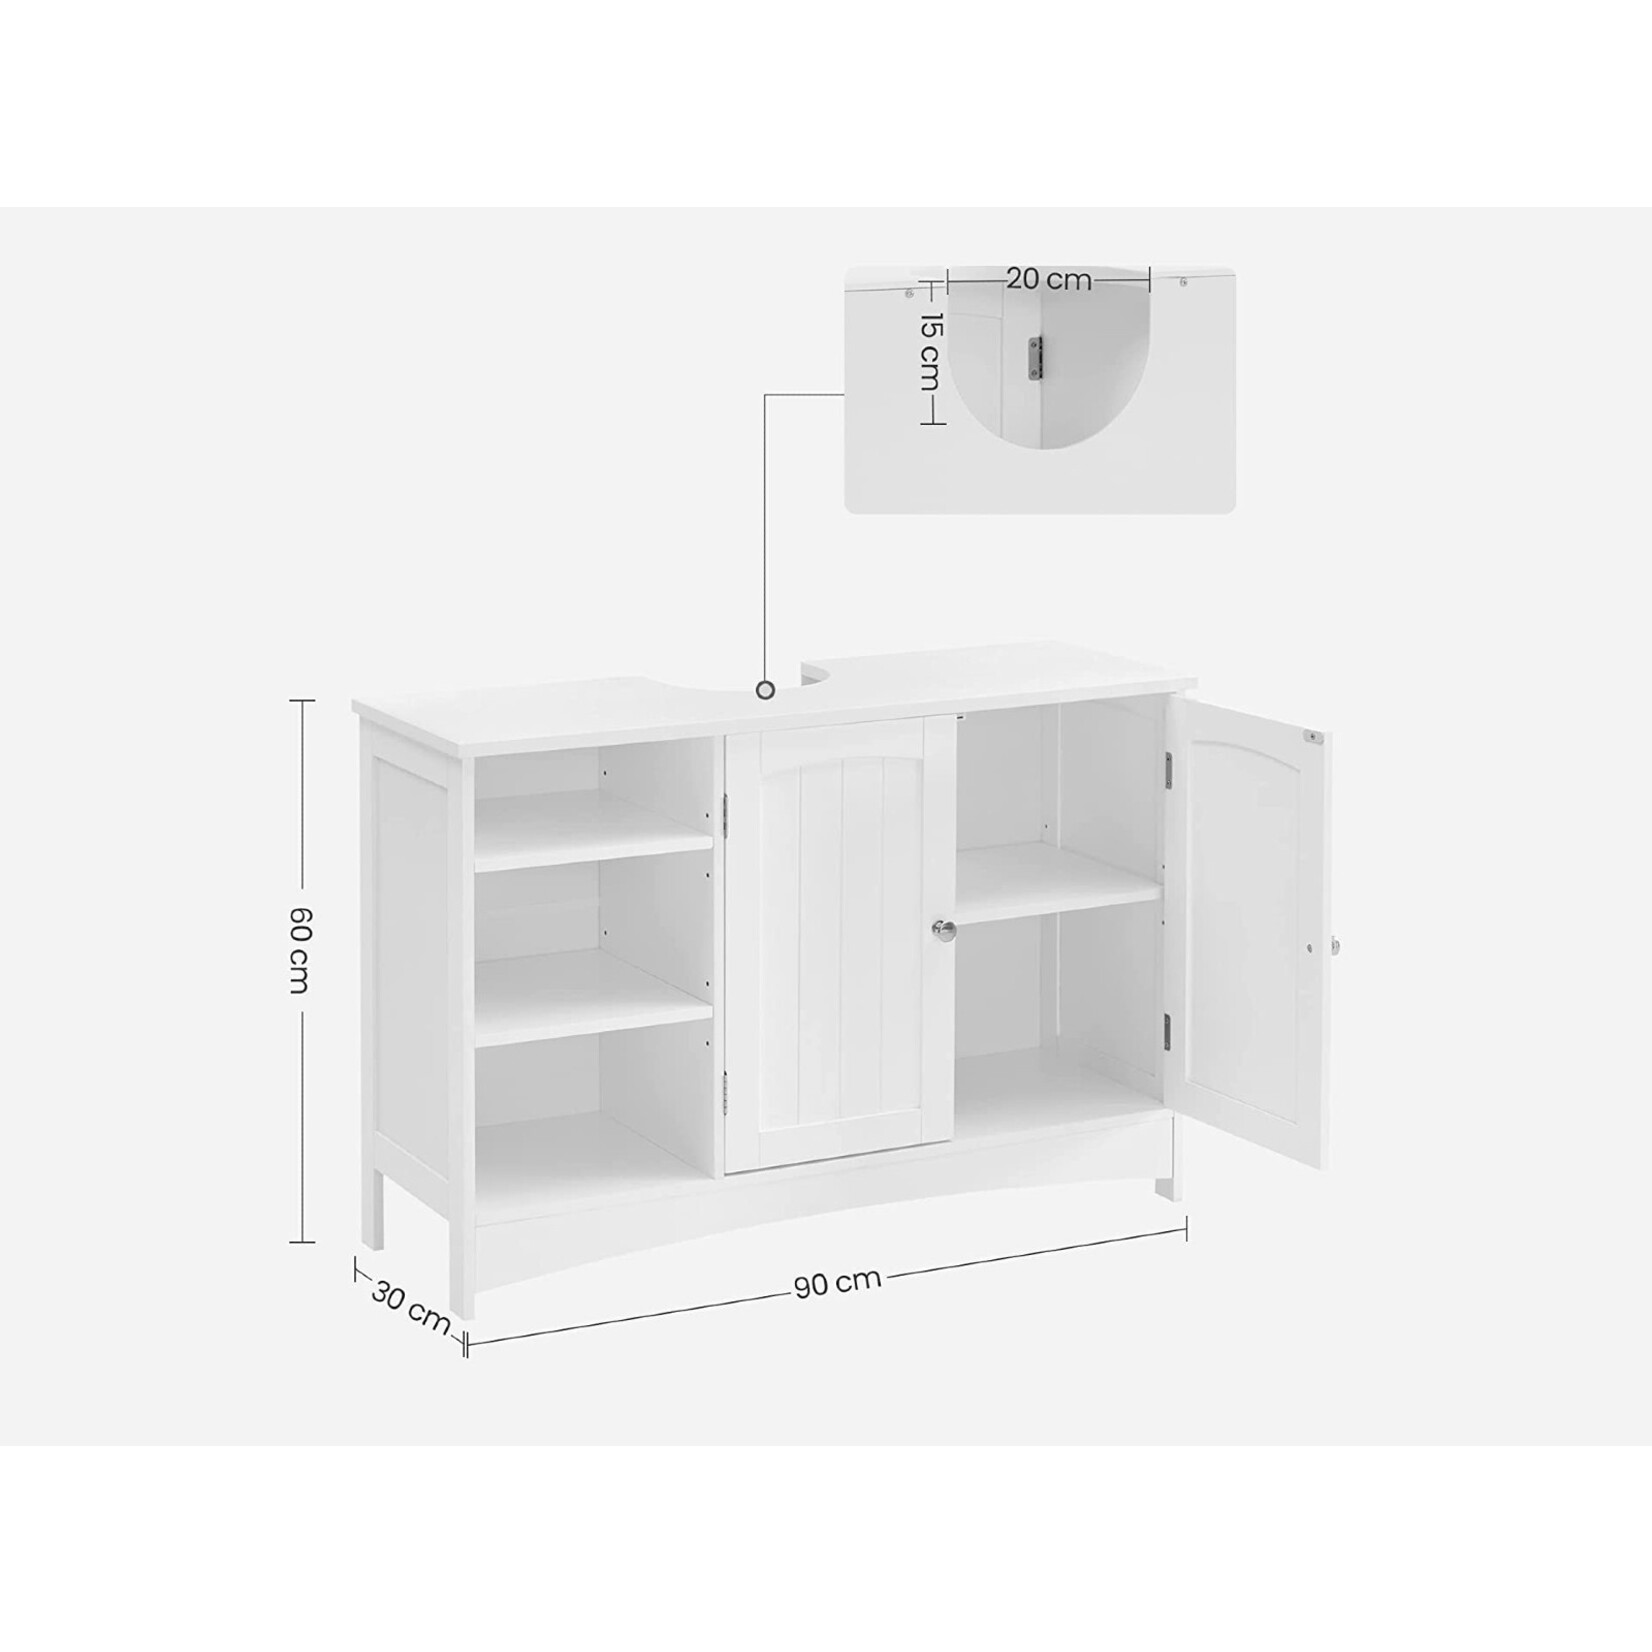 Parya Home Parya Home - Basin cabinet - Cabinet - 2 Doors - 2 Shelves - Wood - White